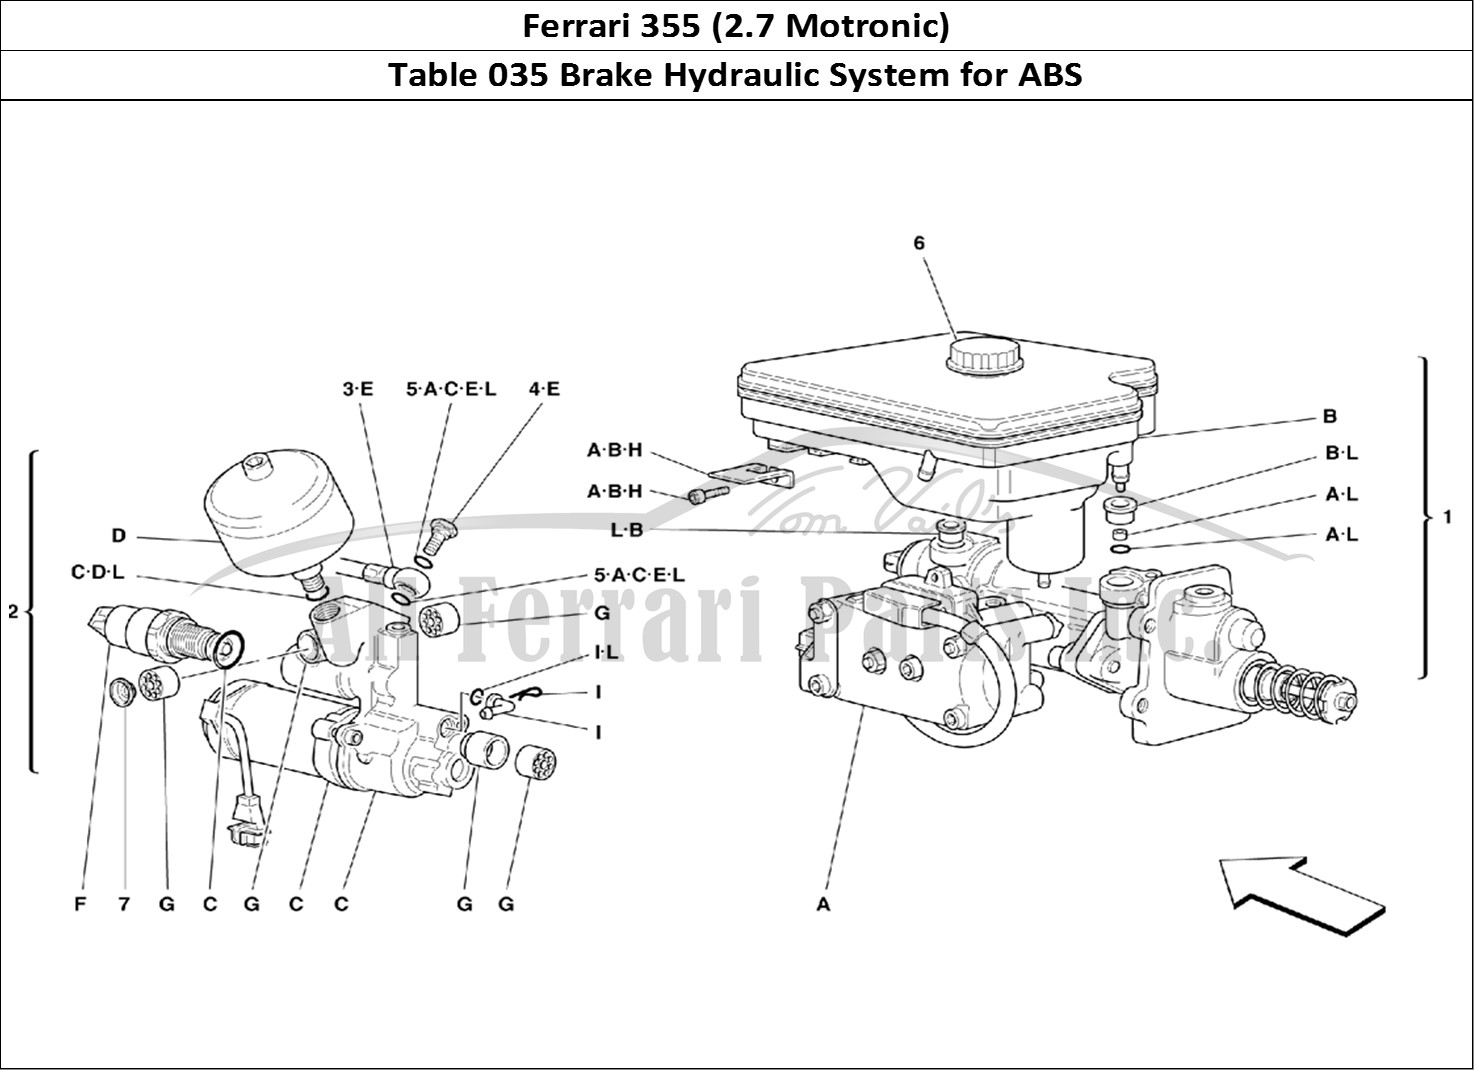 Ferrari Parts Ferrari 355 (2.7 Motronic) Page 035 Hydraulic System for ABS